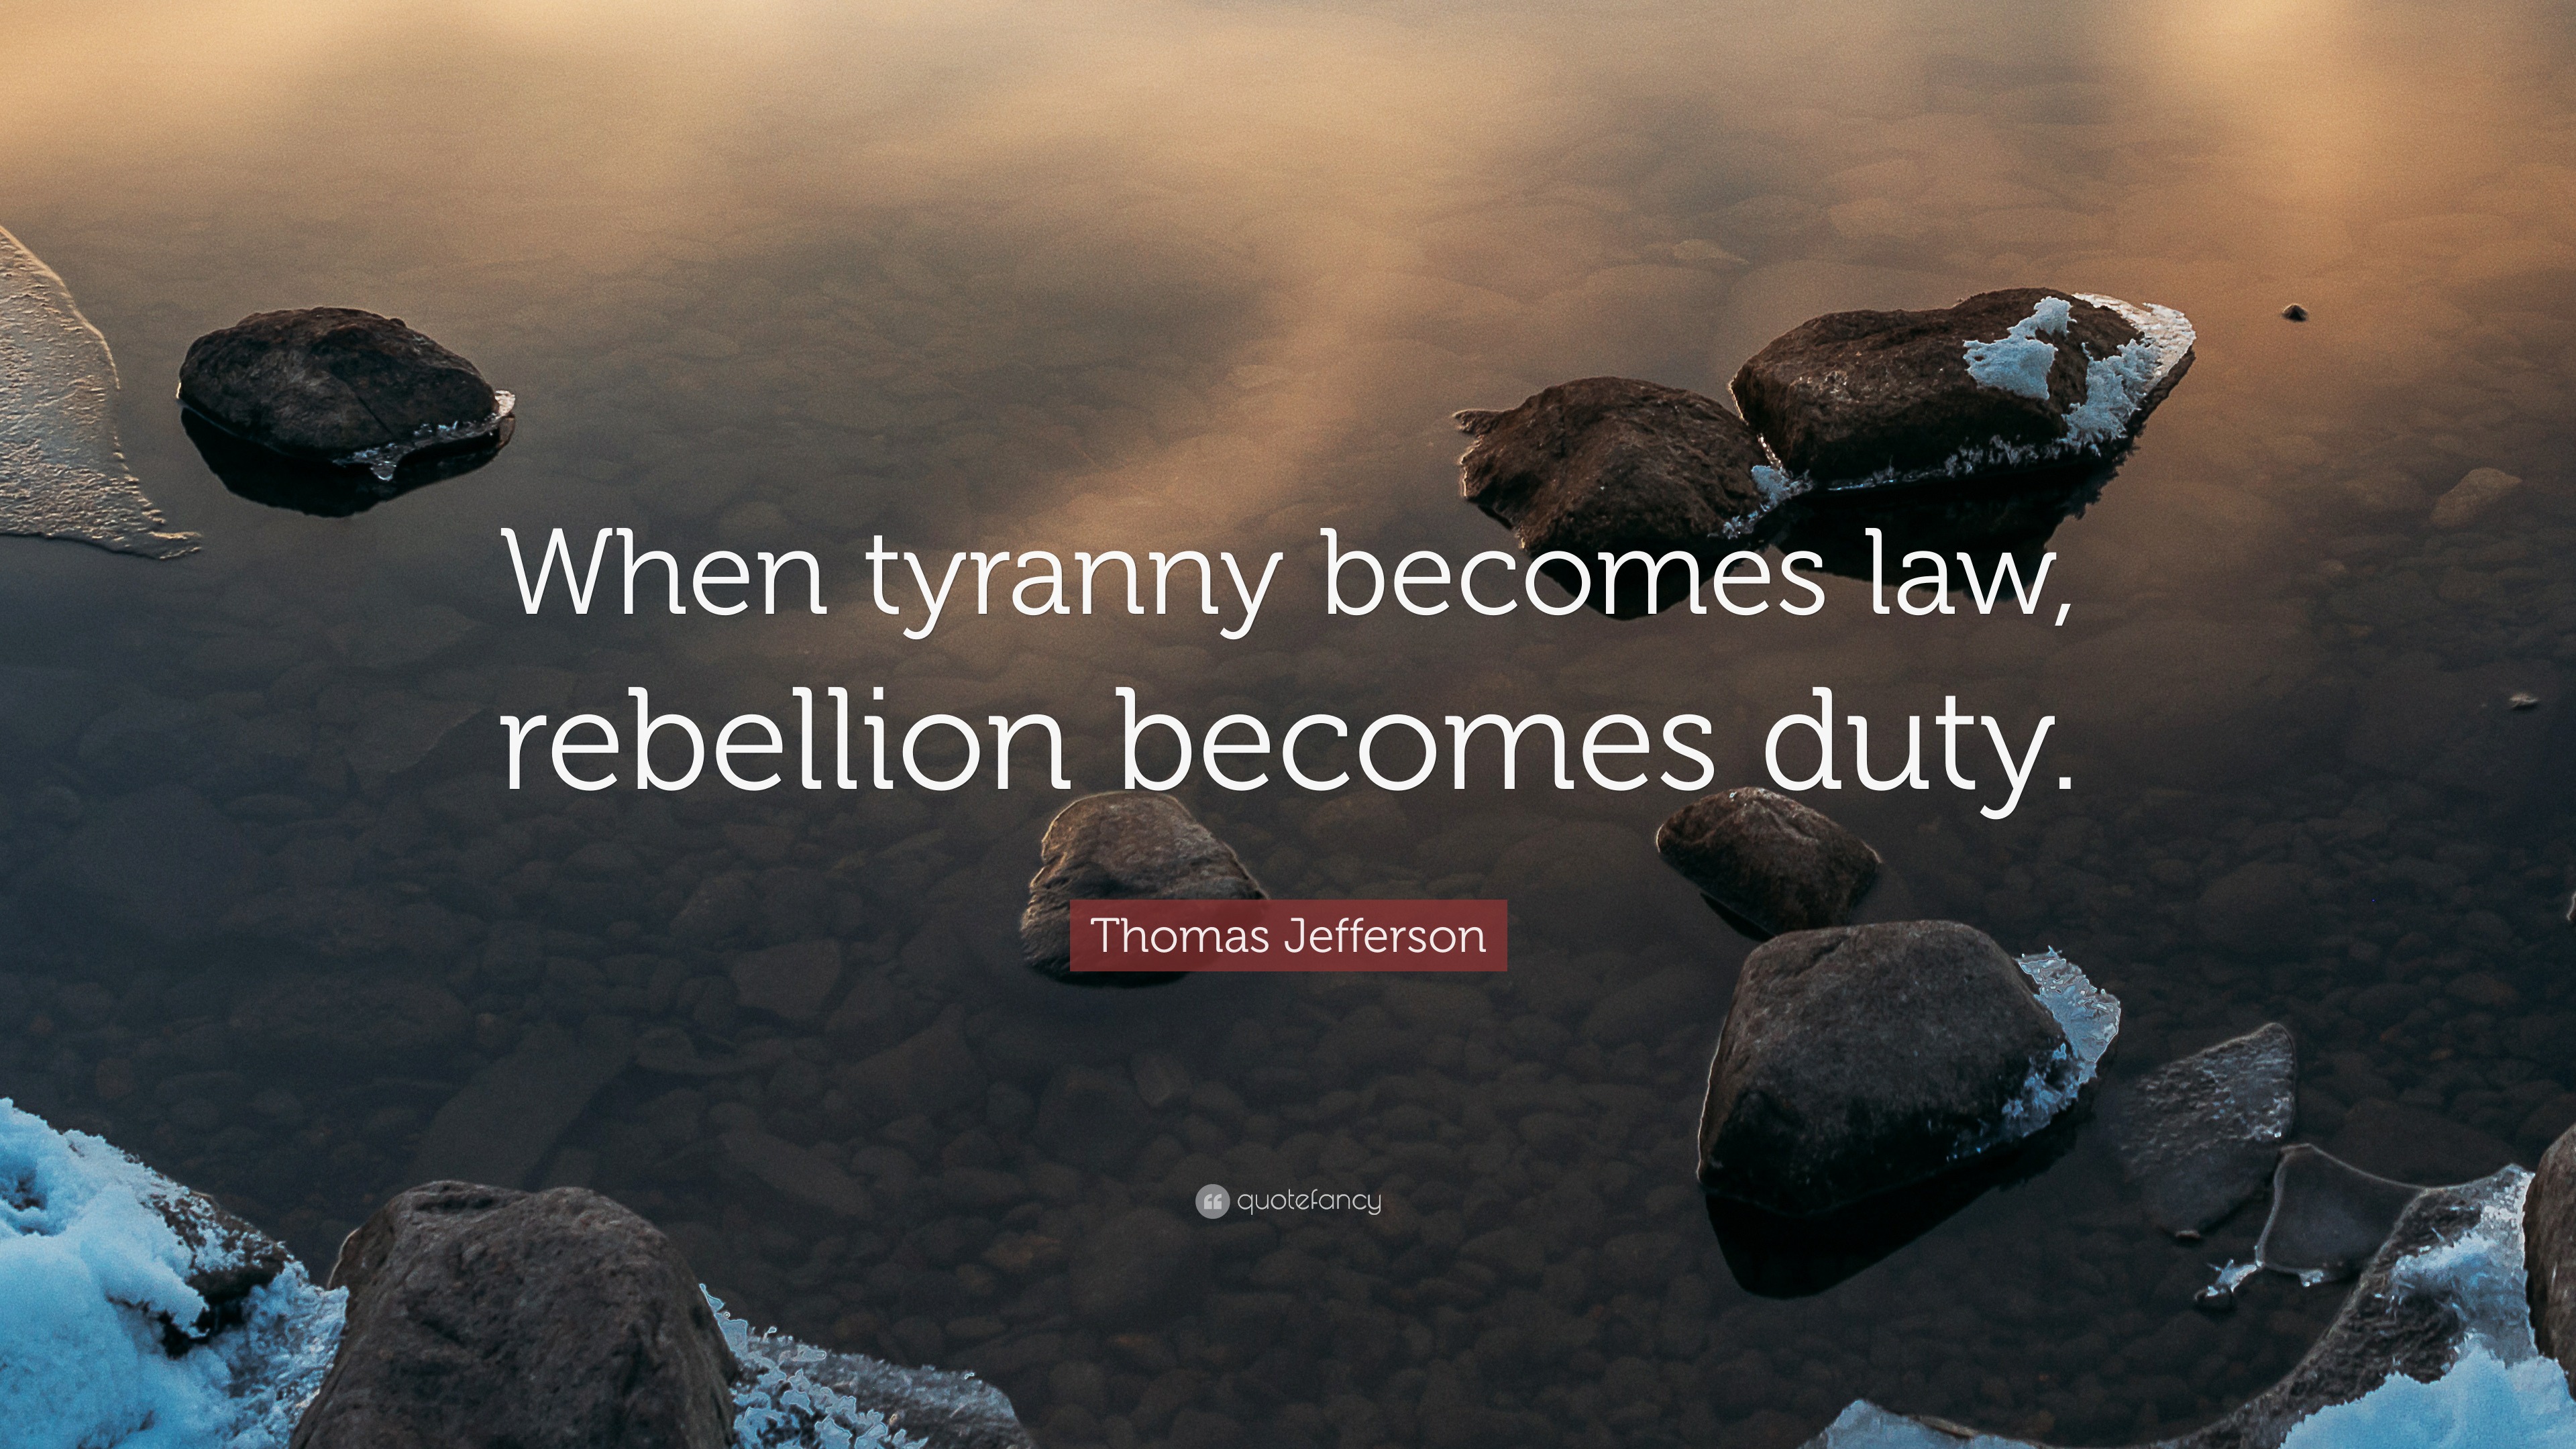 thomas jefferson tyranny quote